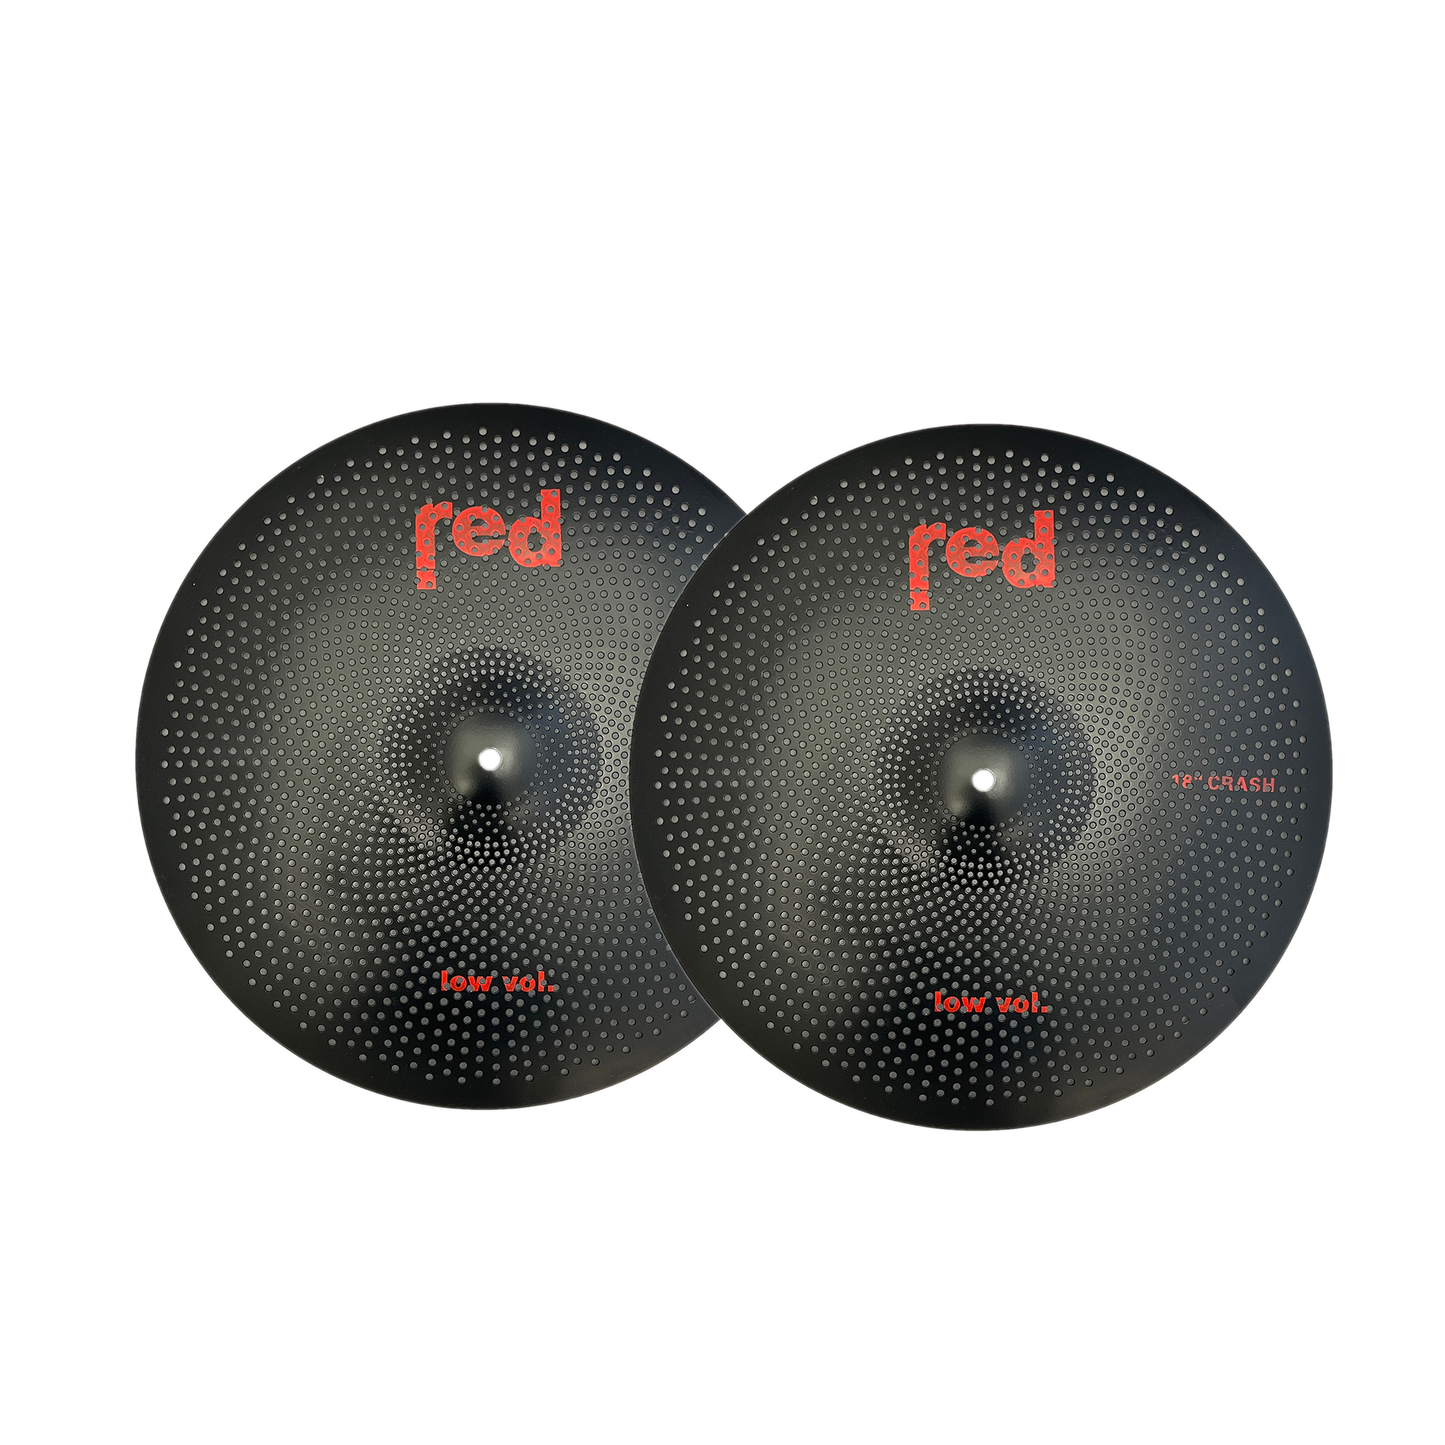 Red Cymbals Low Volume Hi Hat Cymbal Set